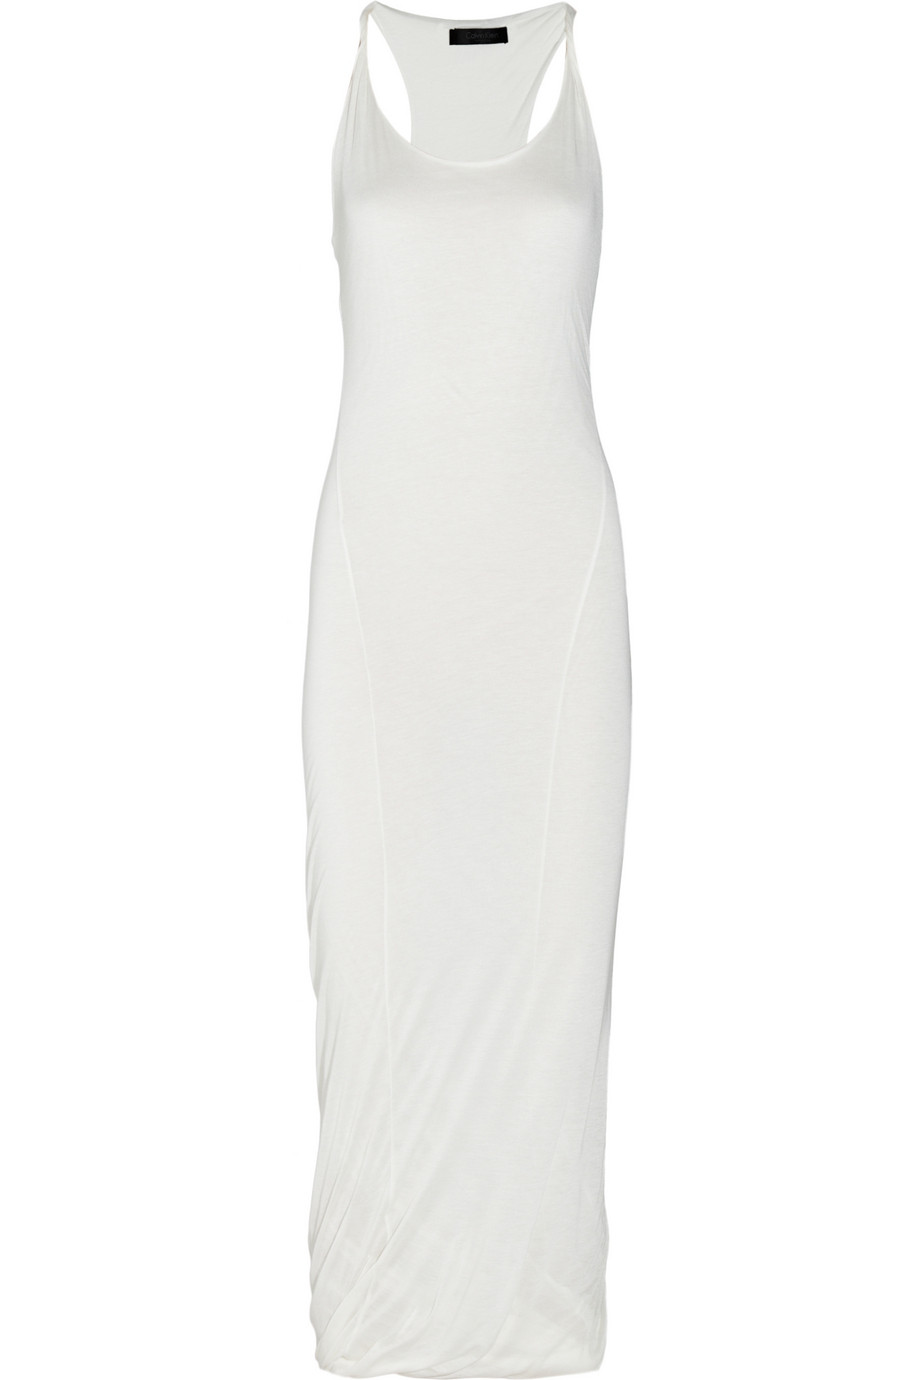 Lyst - Calvin Klein Chayen Modal-jersey Maxi Dress in White